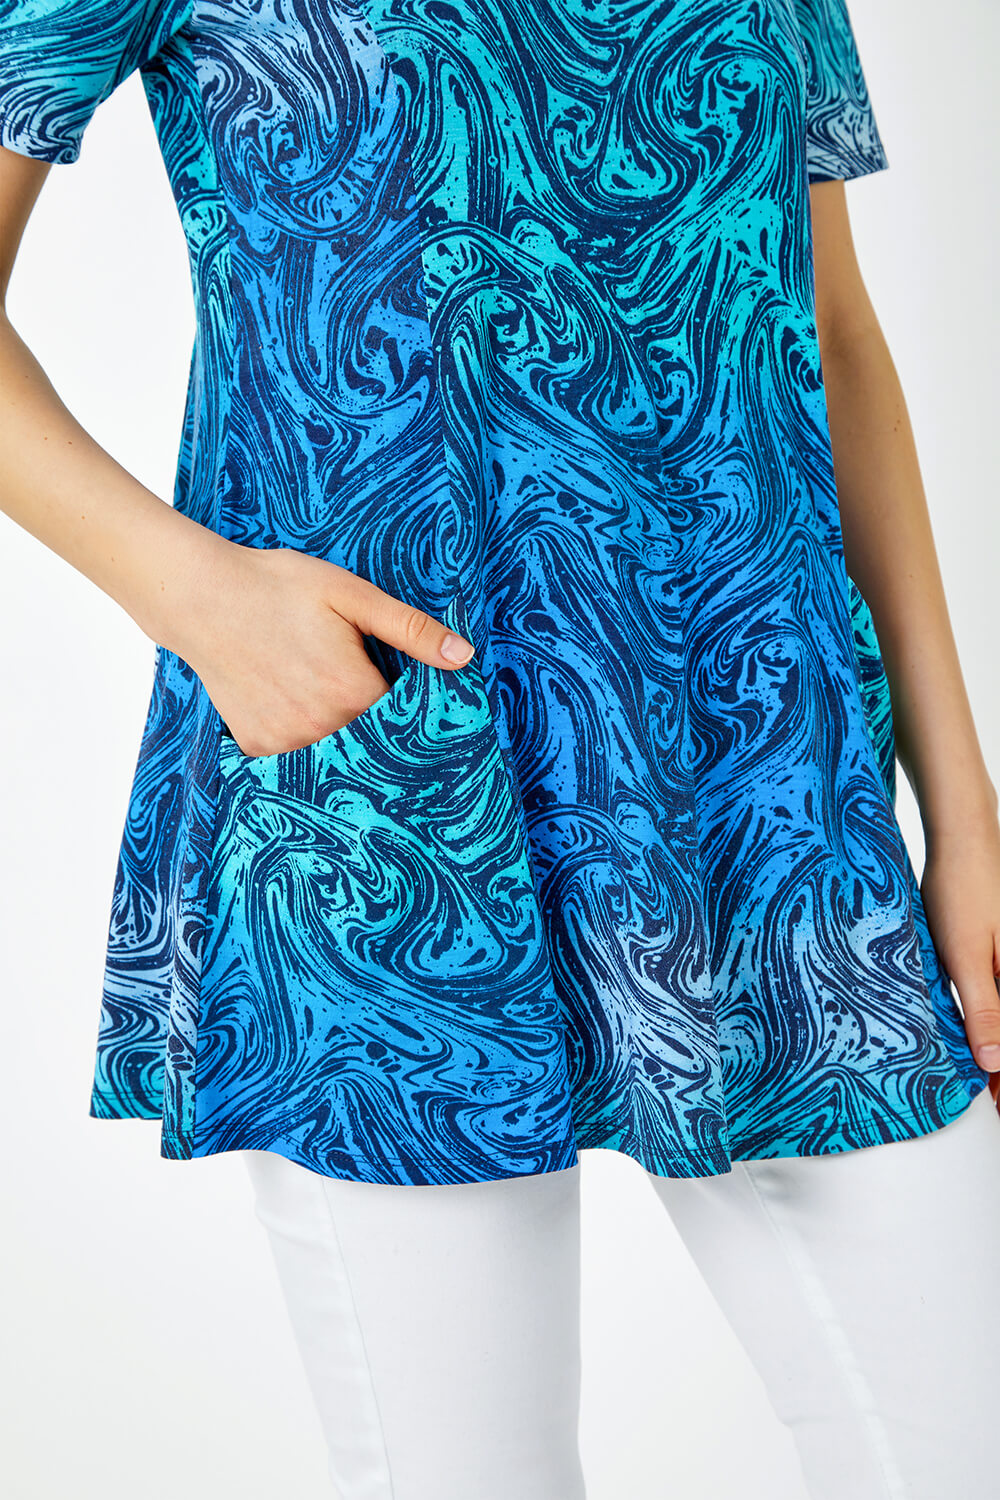 Blue Swirl Print Stretch Tunic Pocket Top, Image 5 of 5